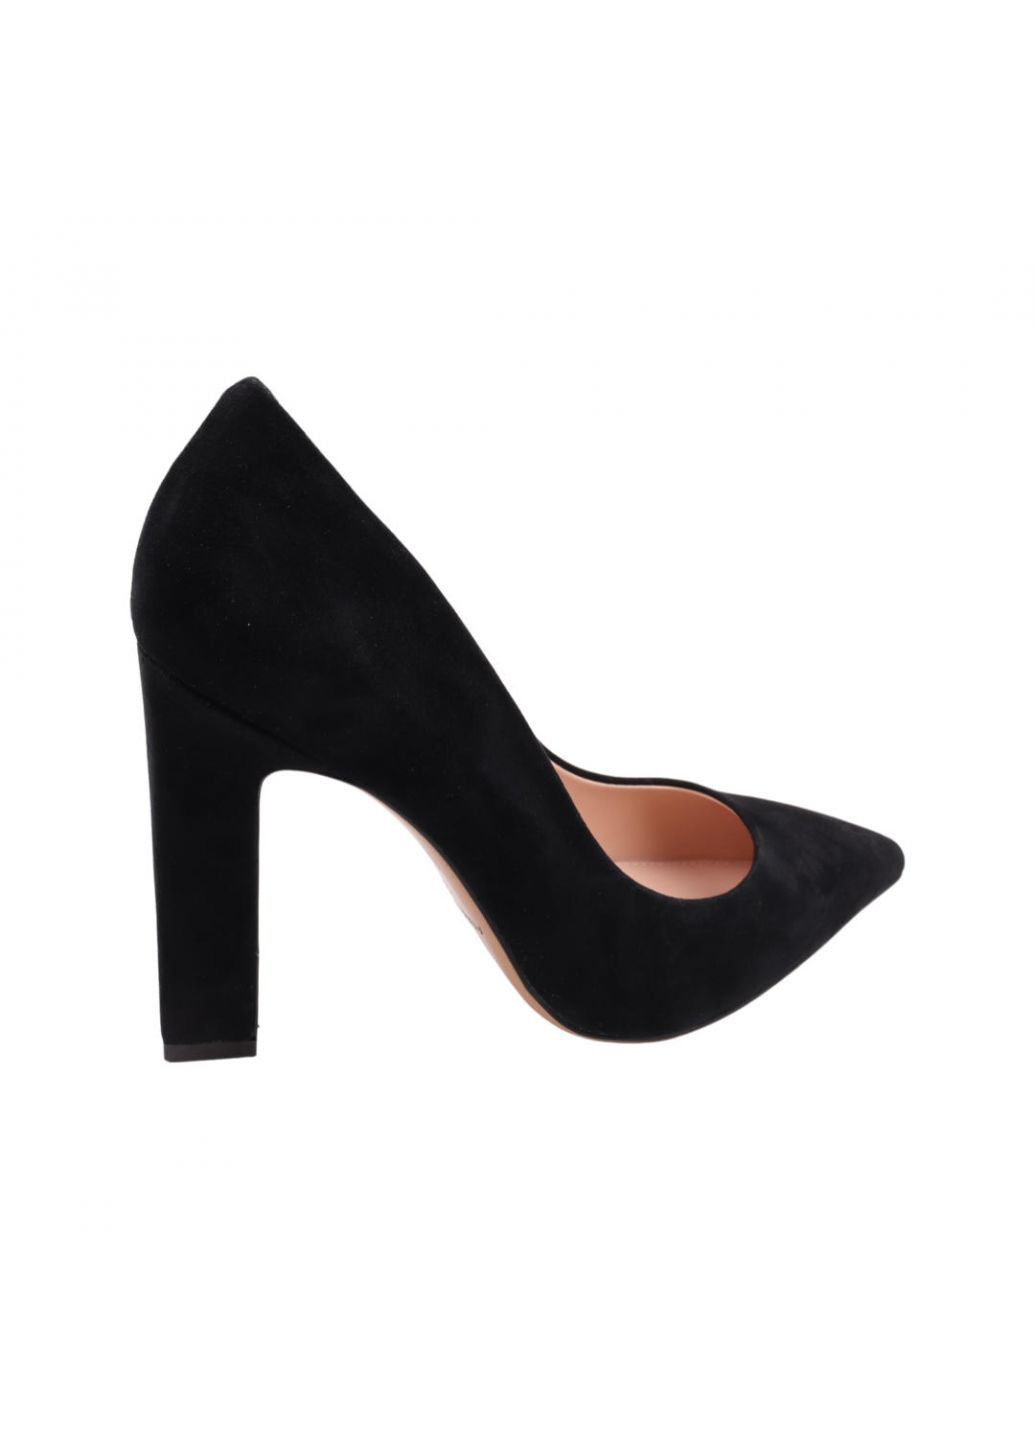 Туфлі жіночі чорні натуральна замша Anemone 226-22dt (257439506)